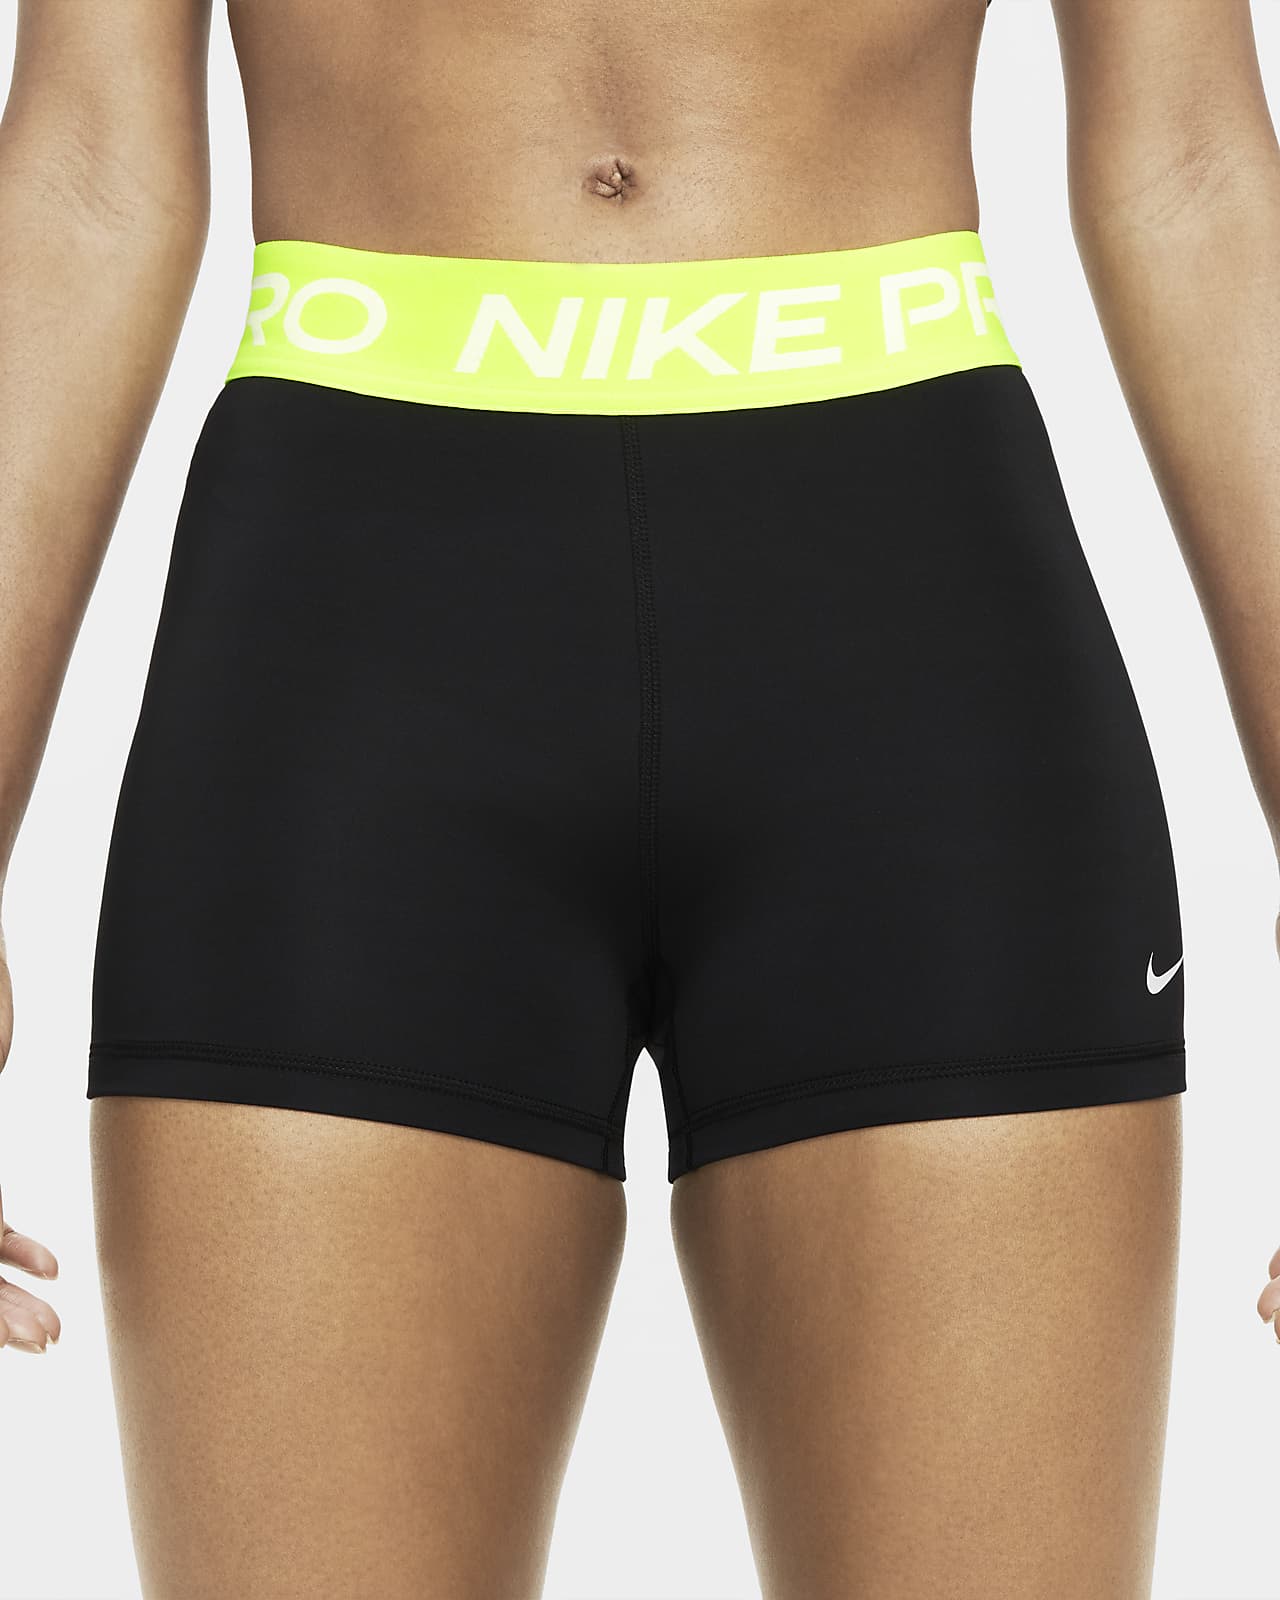 Underwear Nike Pro | lupon.gov.ph